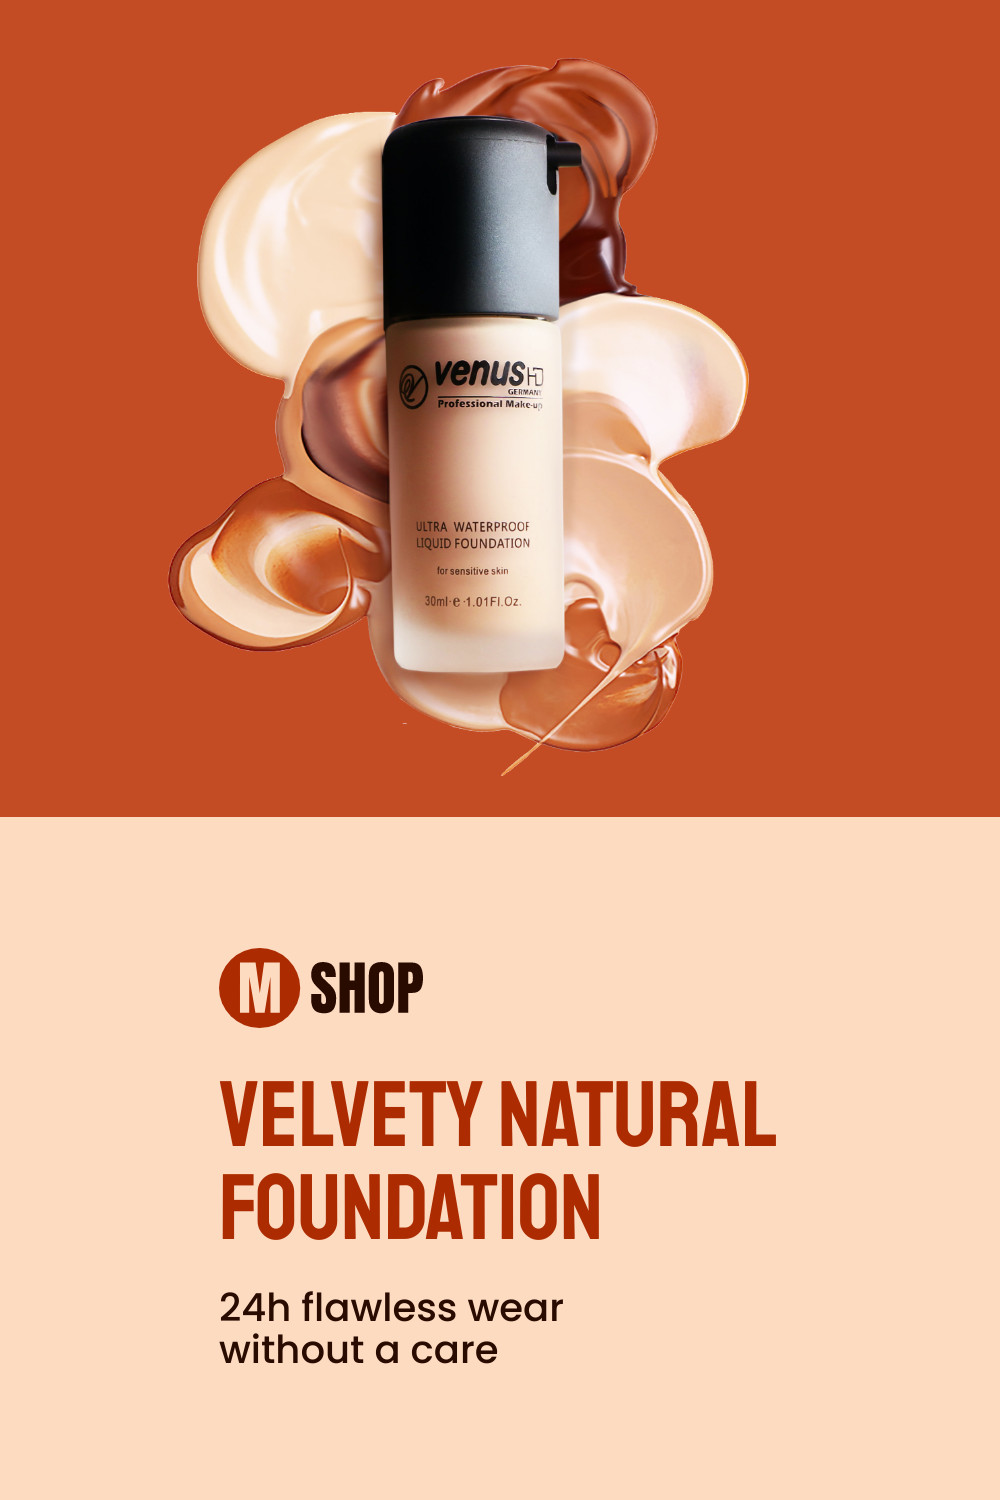 Velvety Natural Foundation